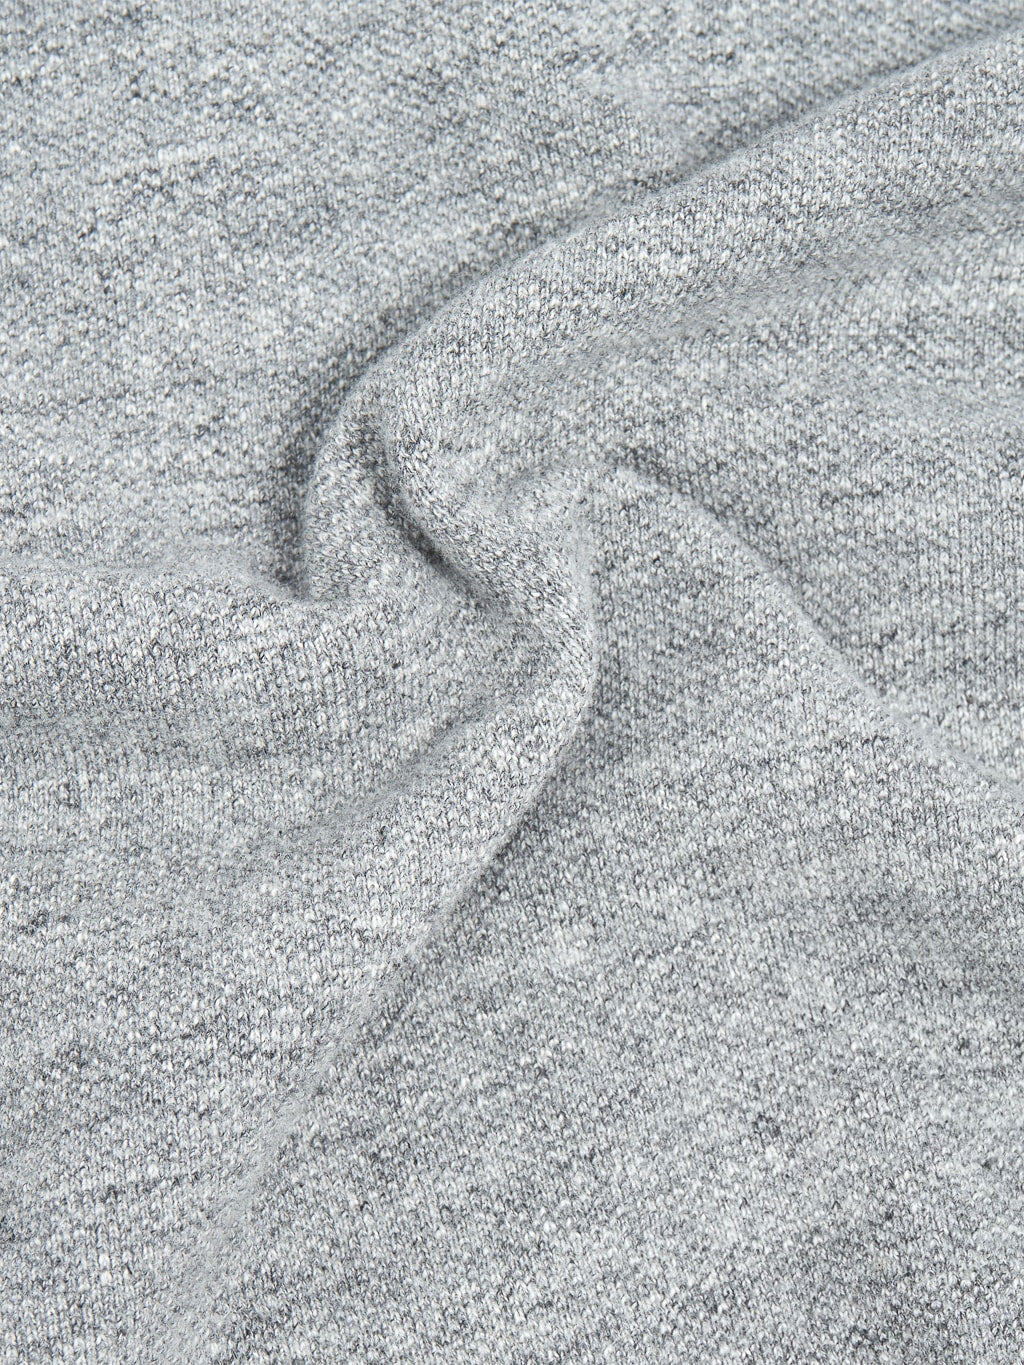 ues polo shirt grey cotton texture